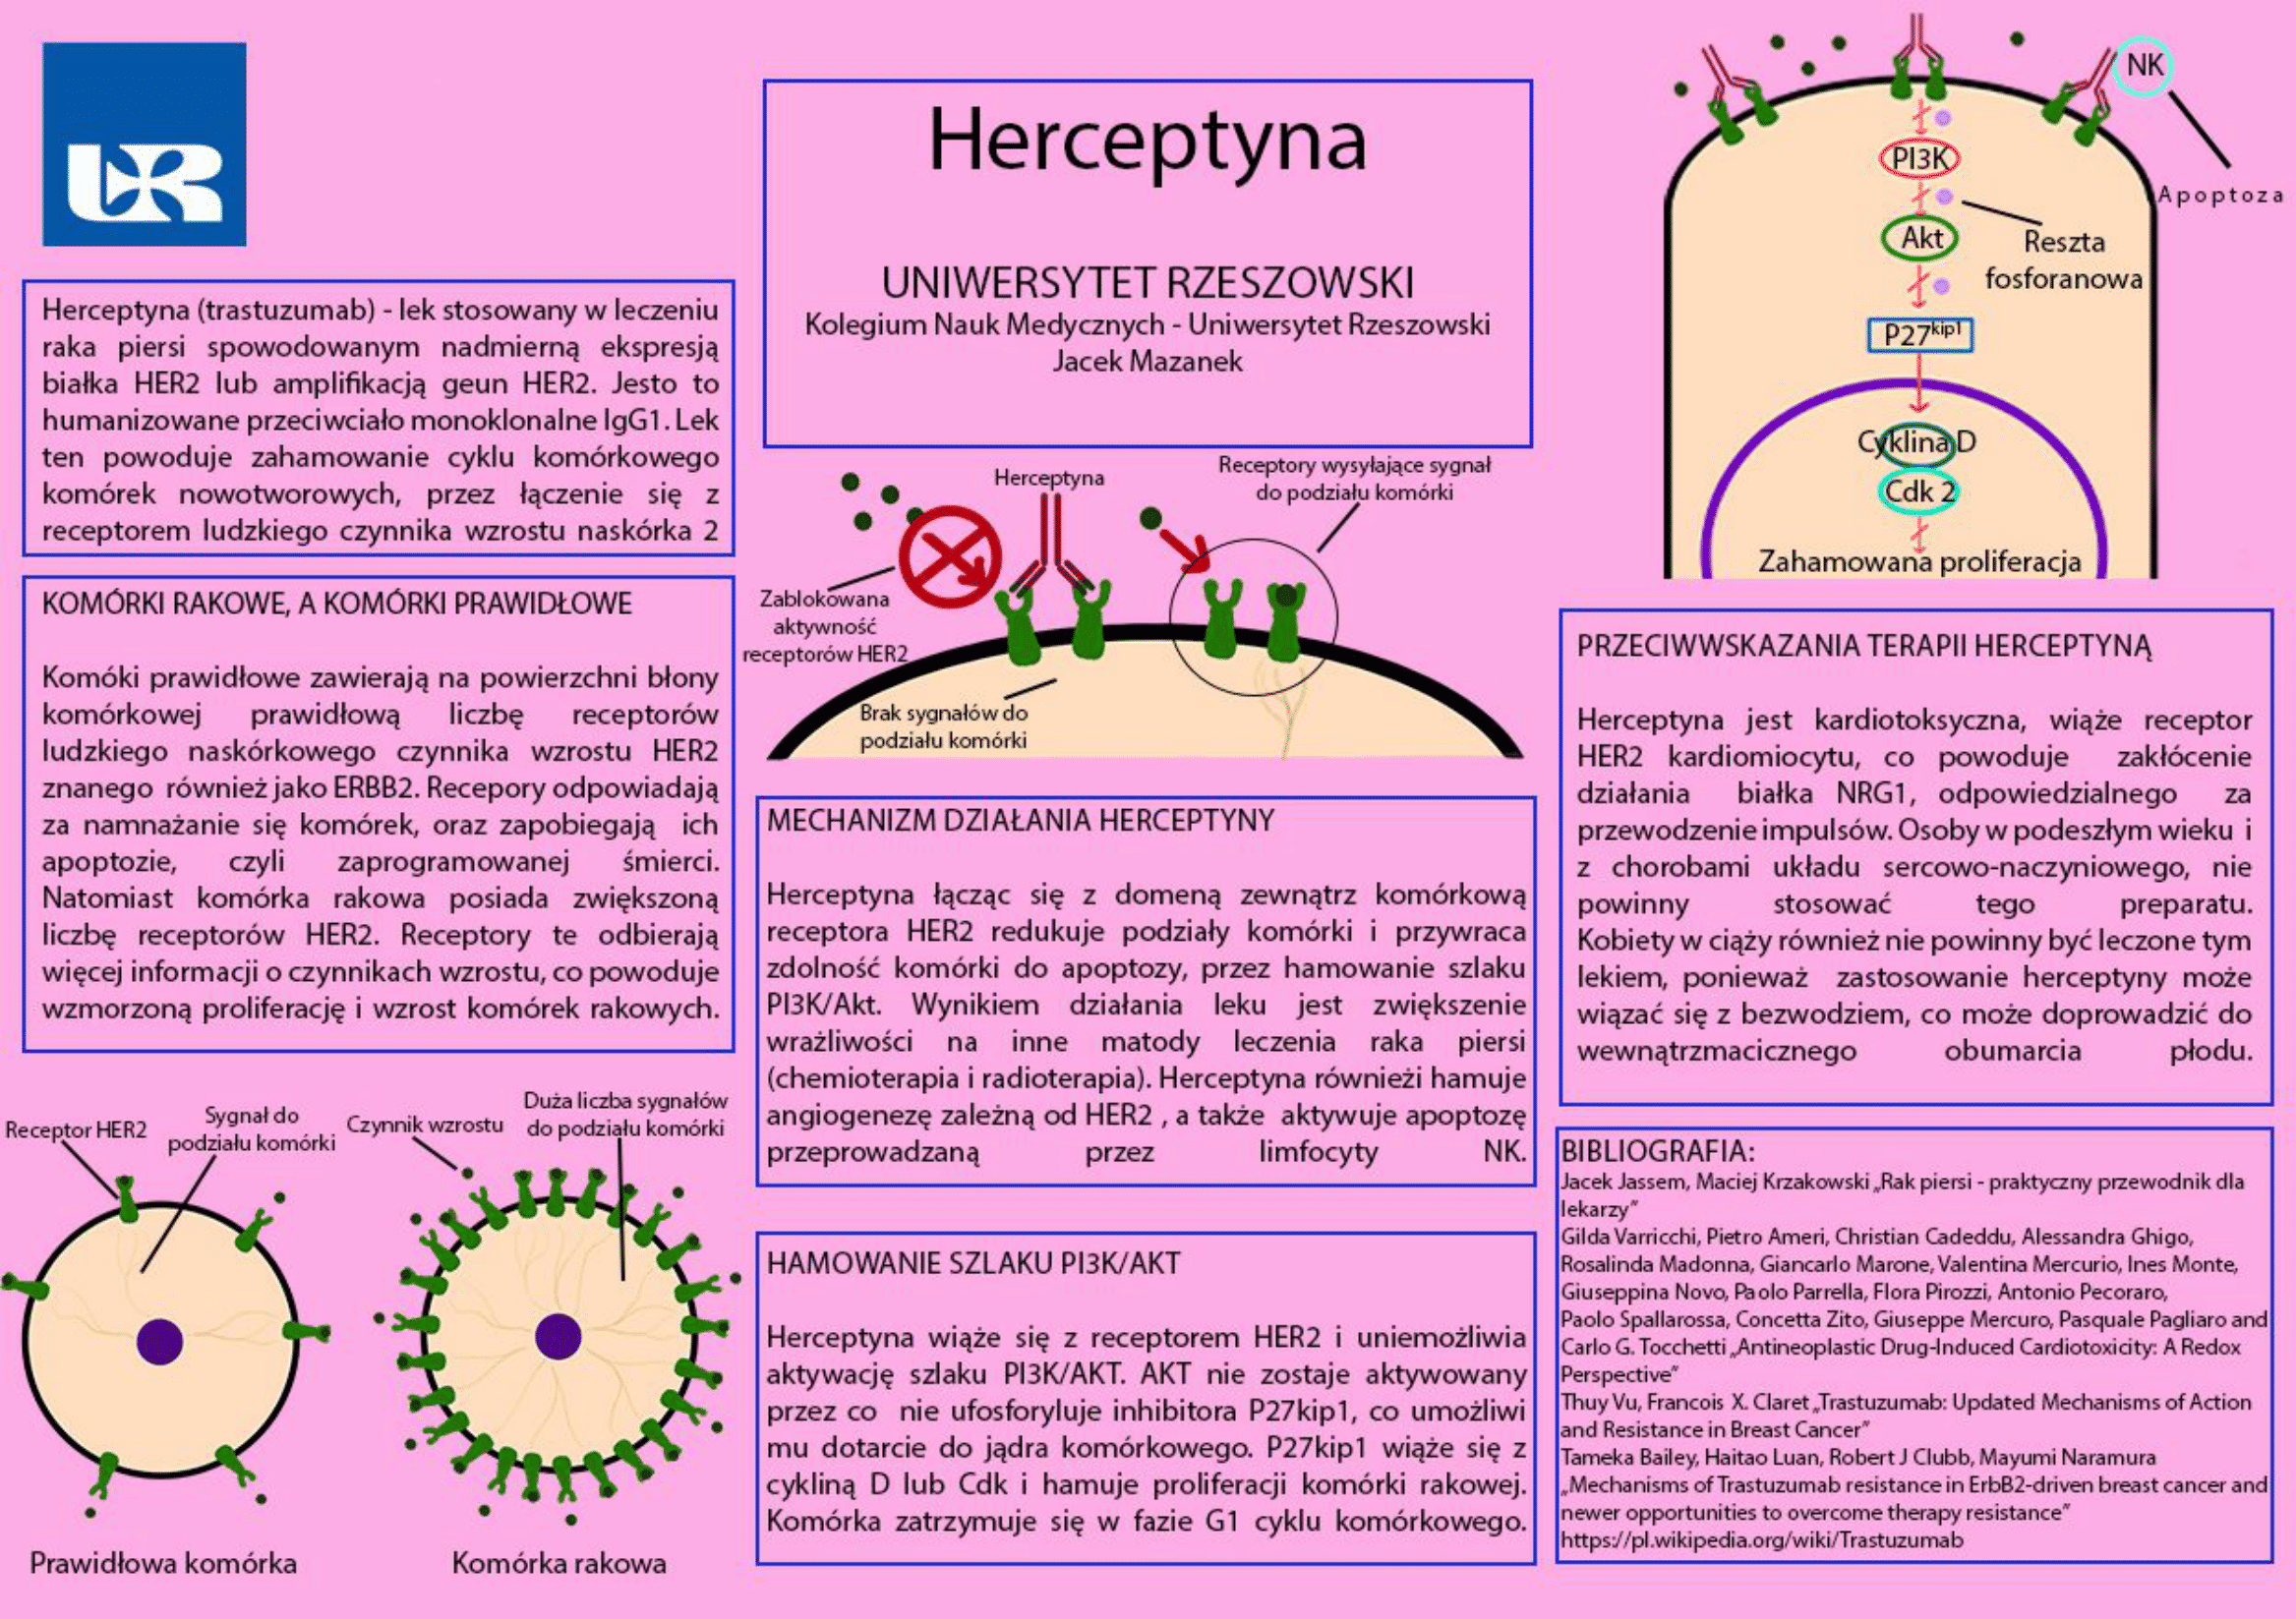 Herceptyna.png [1.71 MB]